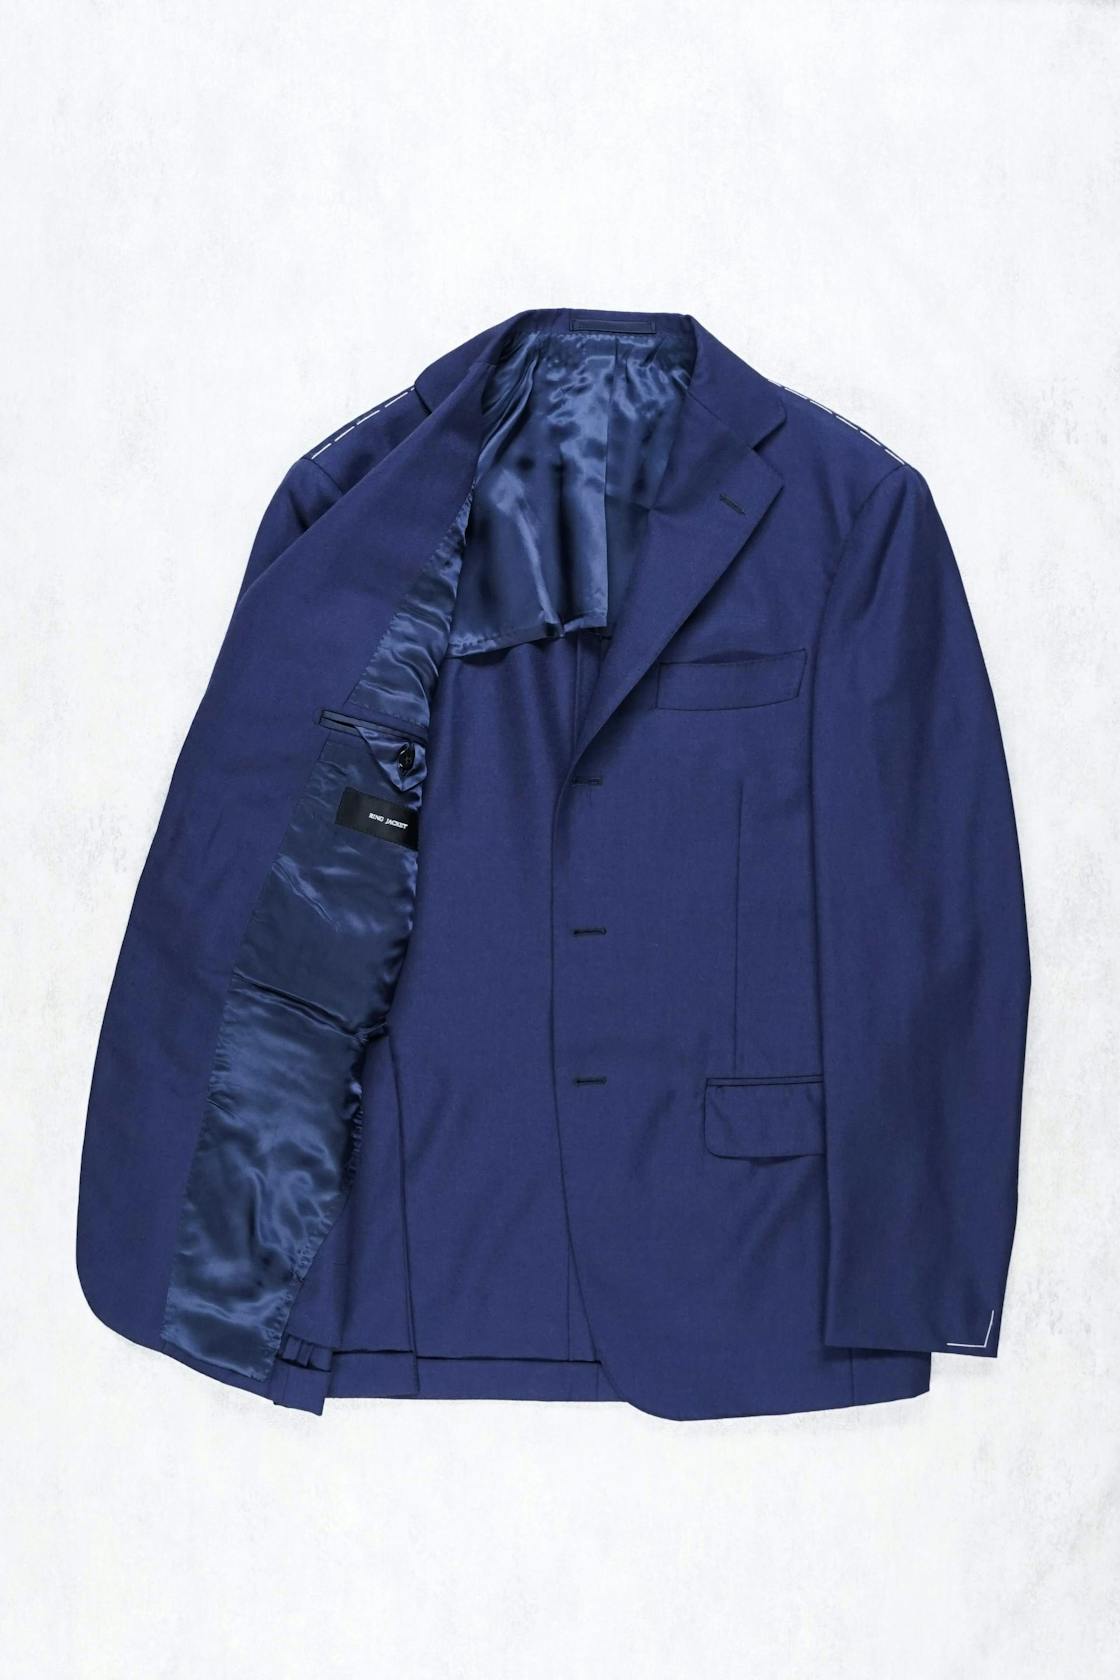 Ring Jacket 184 Navy Wool Suit